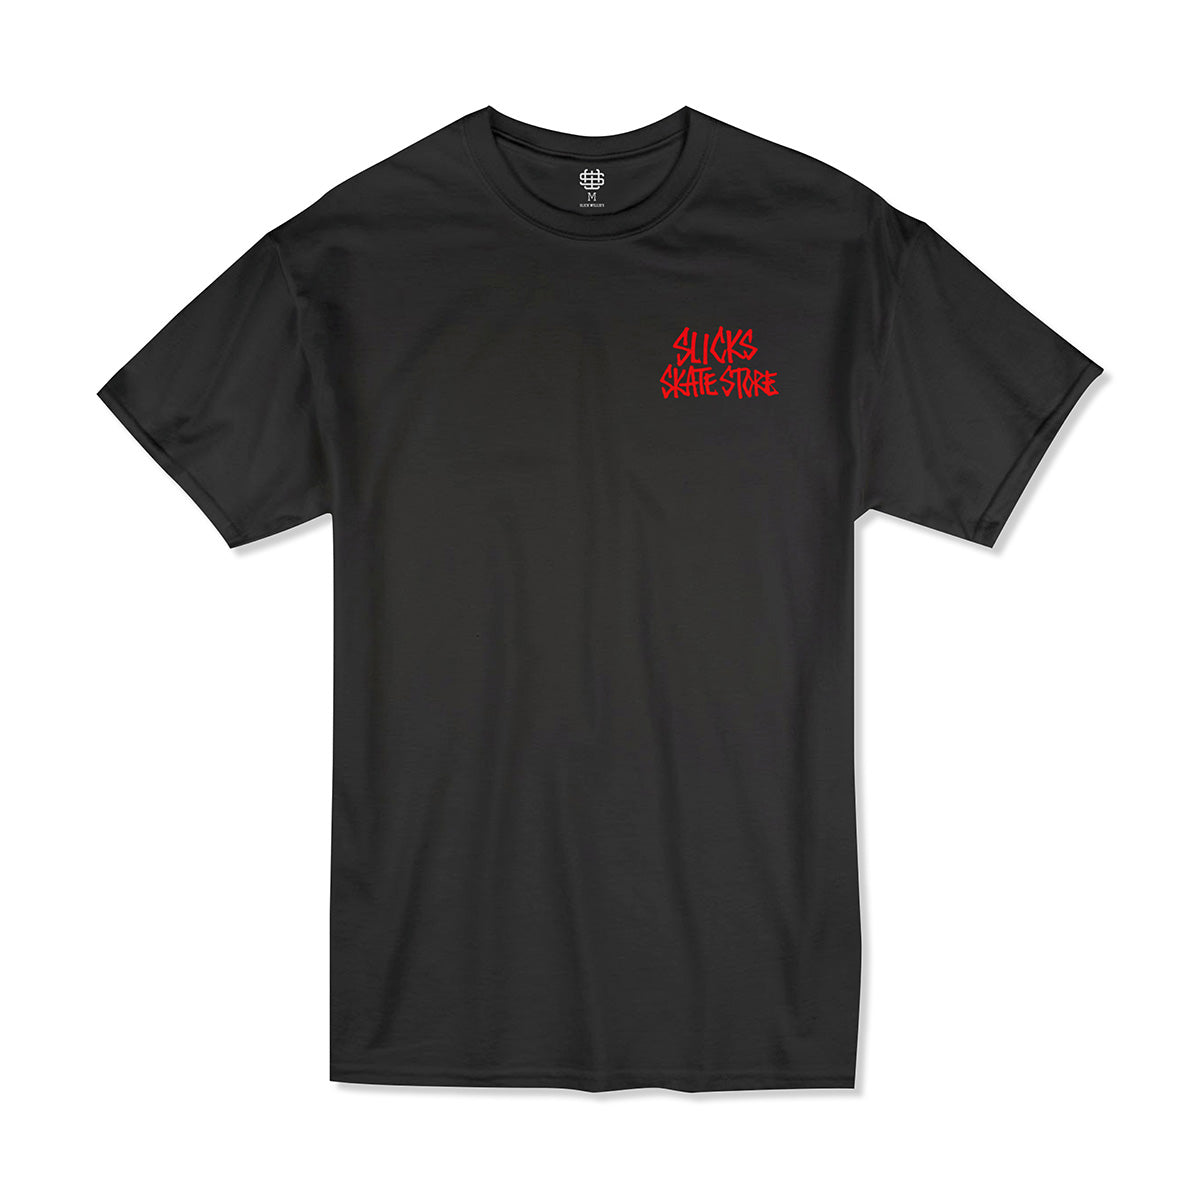 Slick's Skate Store Camiseta Fos Crossbones - Negro